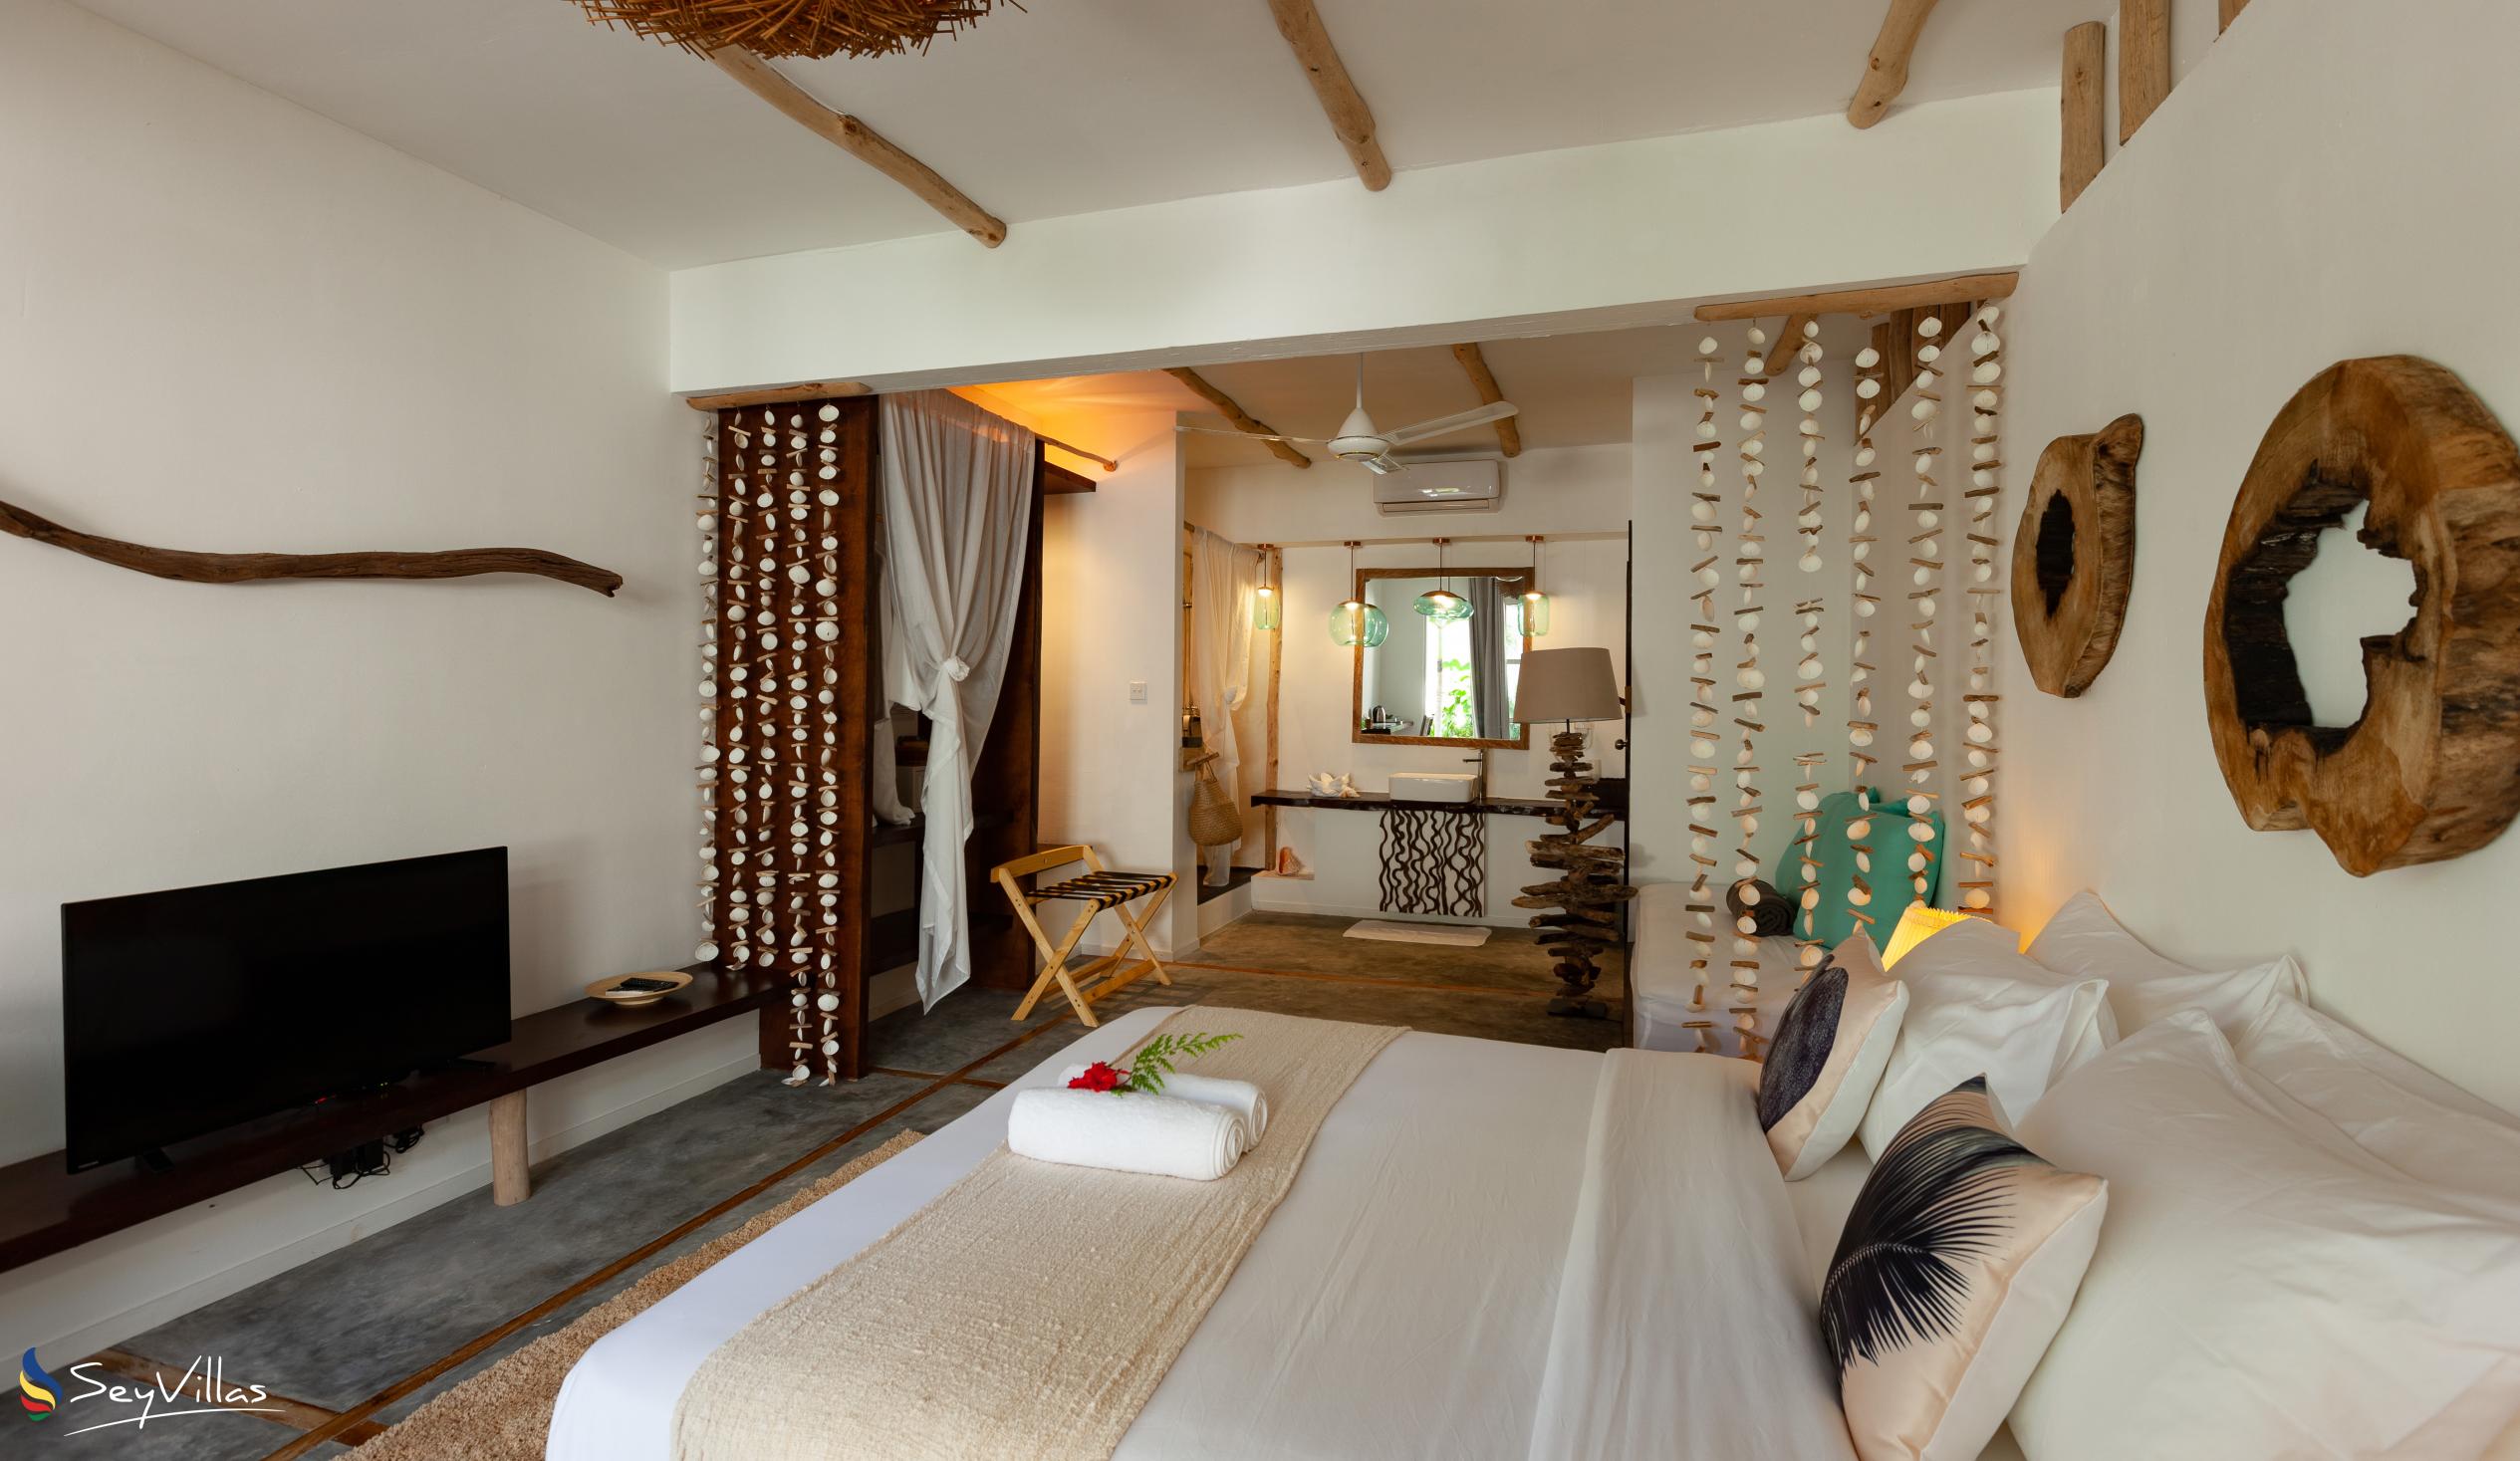 Photo 89: Bliss Hotel Praslin - Beach House - Beach Garden Room - Praslin (Seychelles)